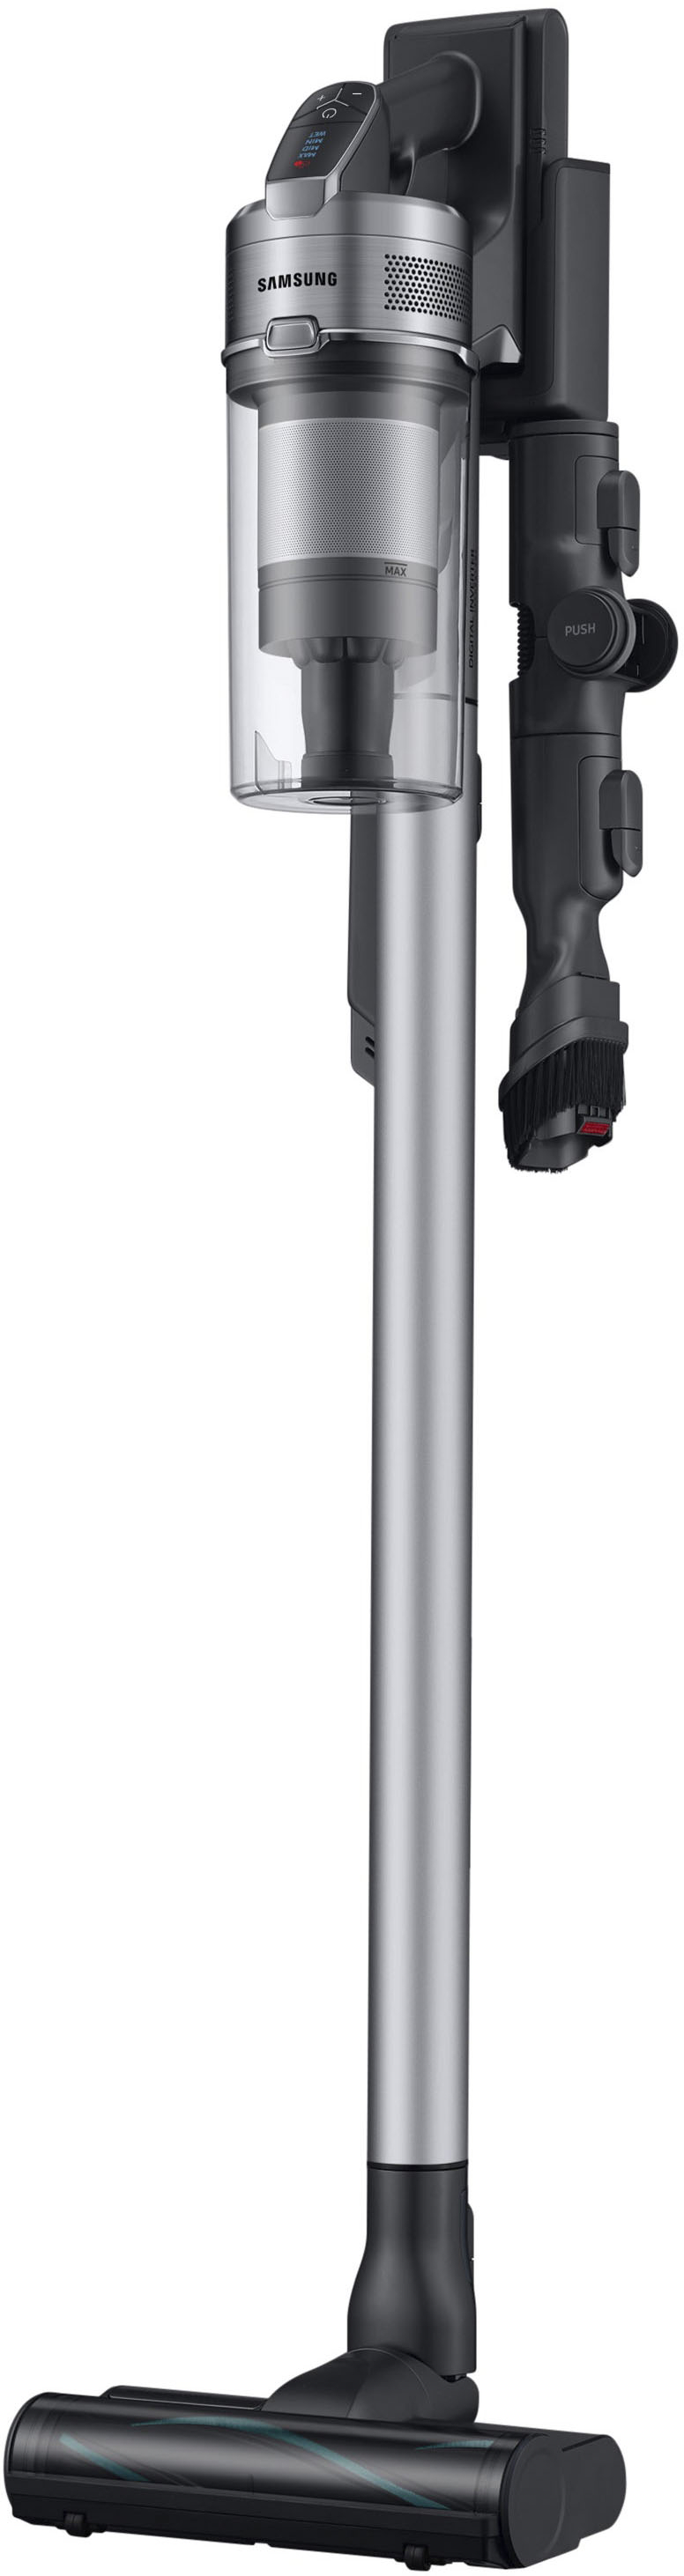 Samsung Jet 75 Cordless Stick Vacuum Titan ChroMetal VS20T7511T5/AA - Best  Buy